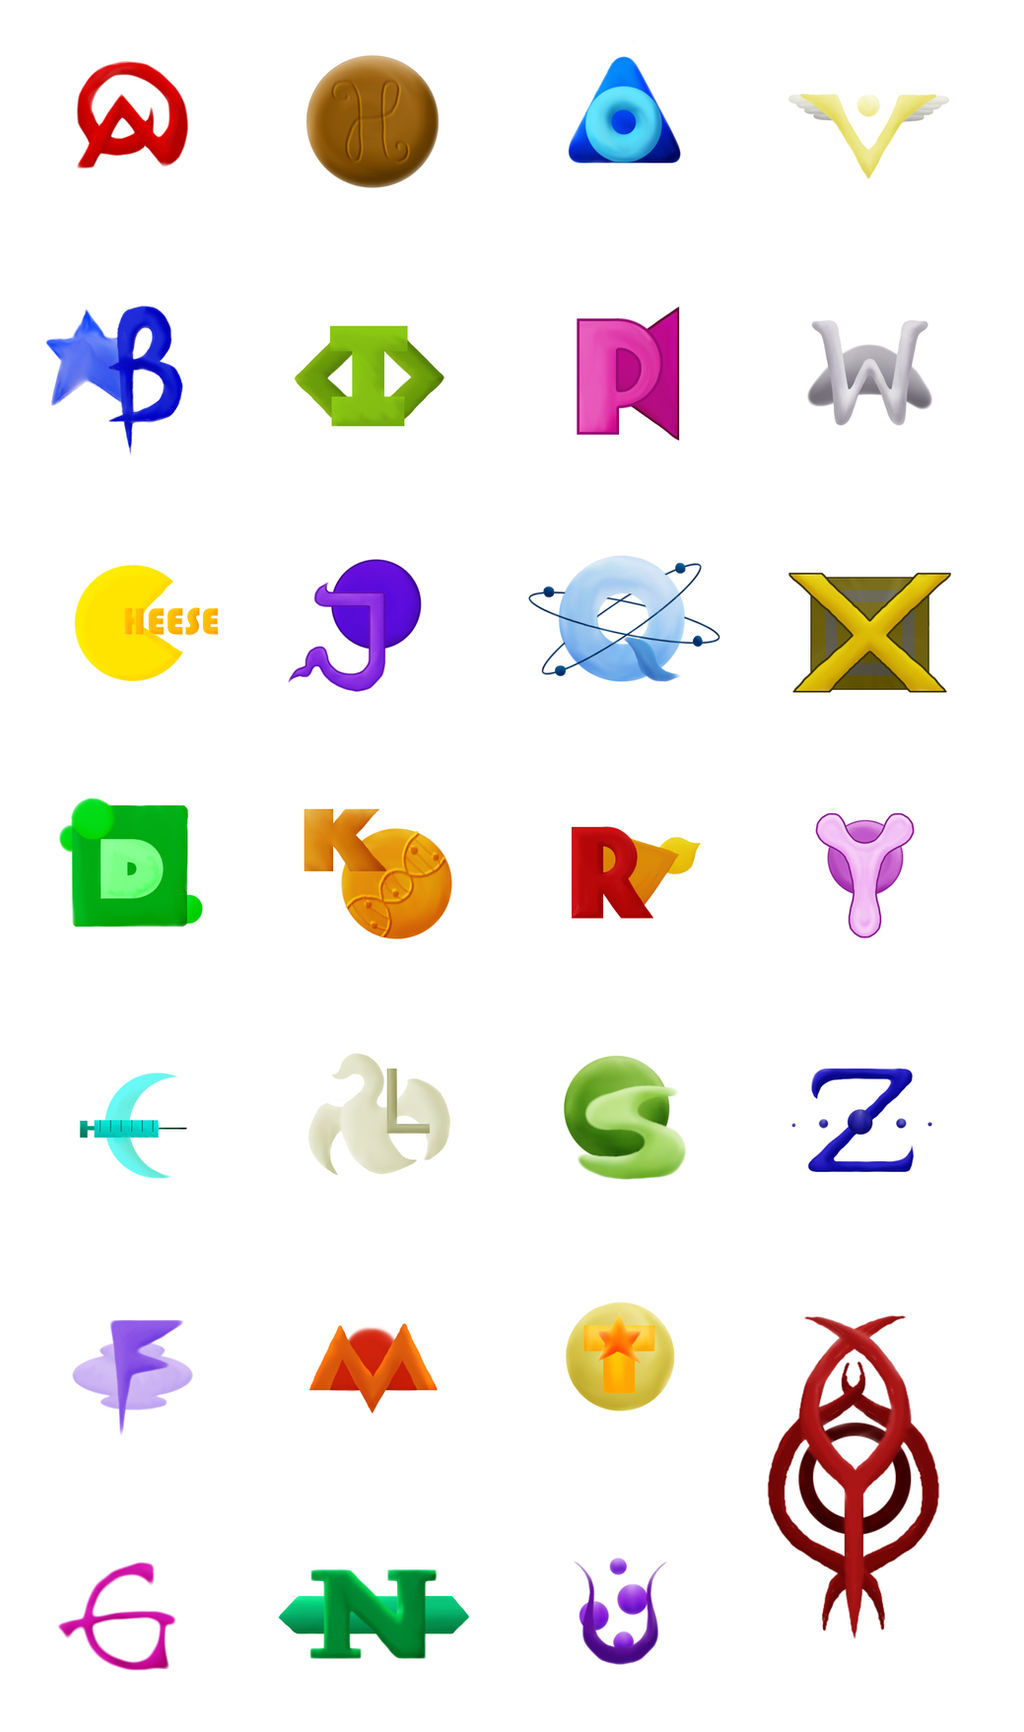 New Pokemon type symbols and chart by RebelliousTreecko on DeviantArt